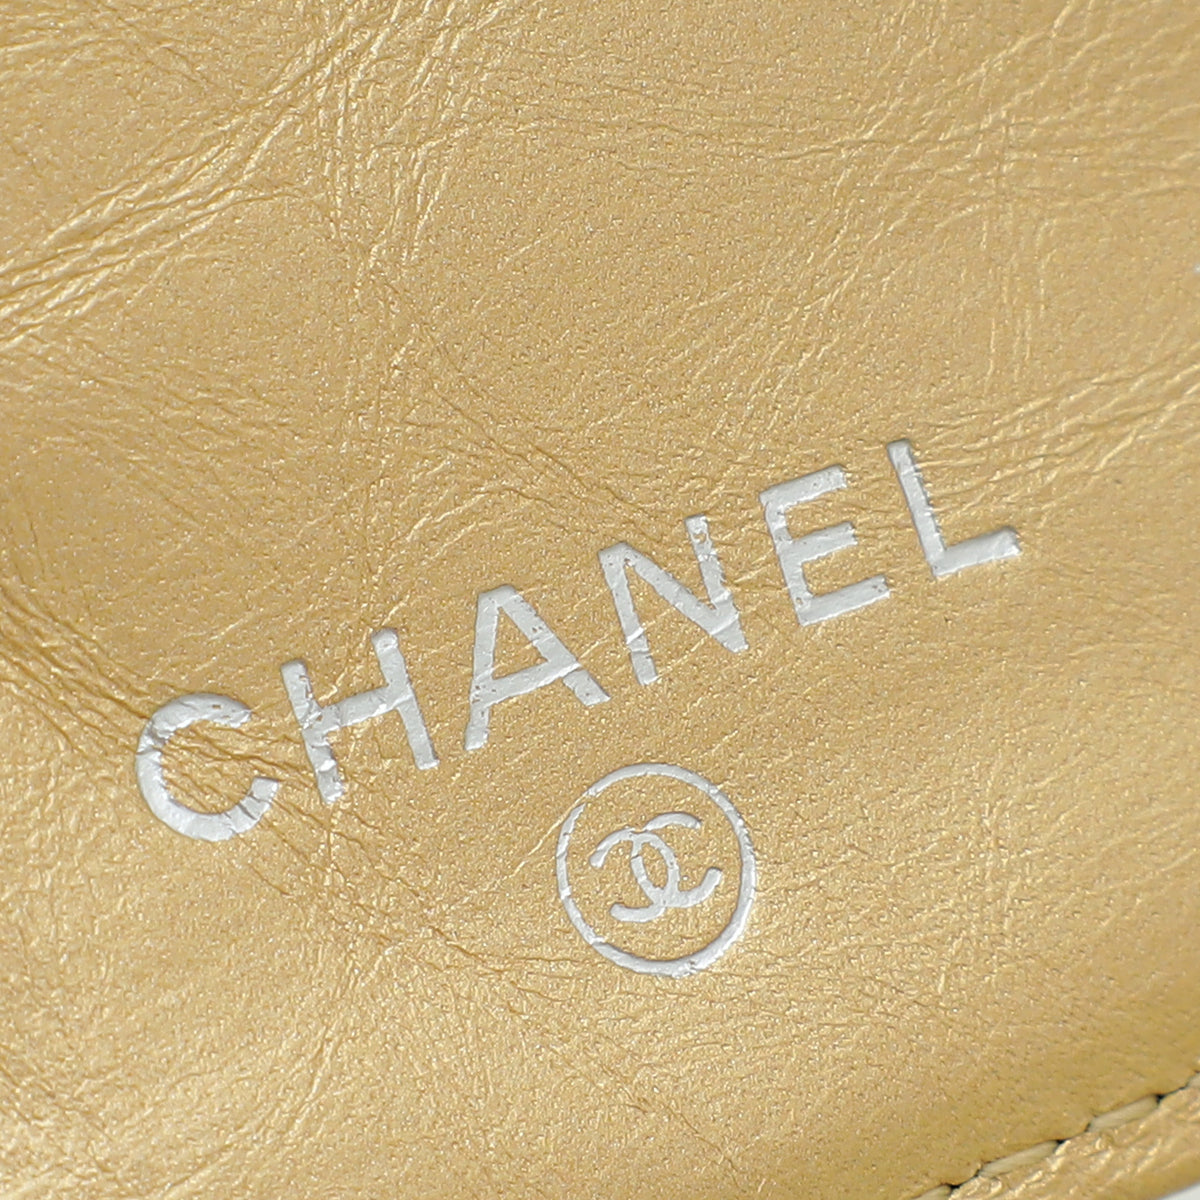 Chanel Gold Reissue Yen Aged Wallet